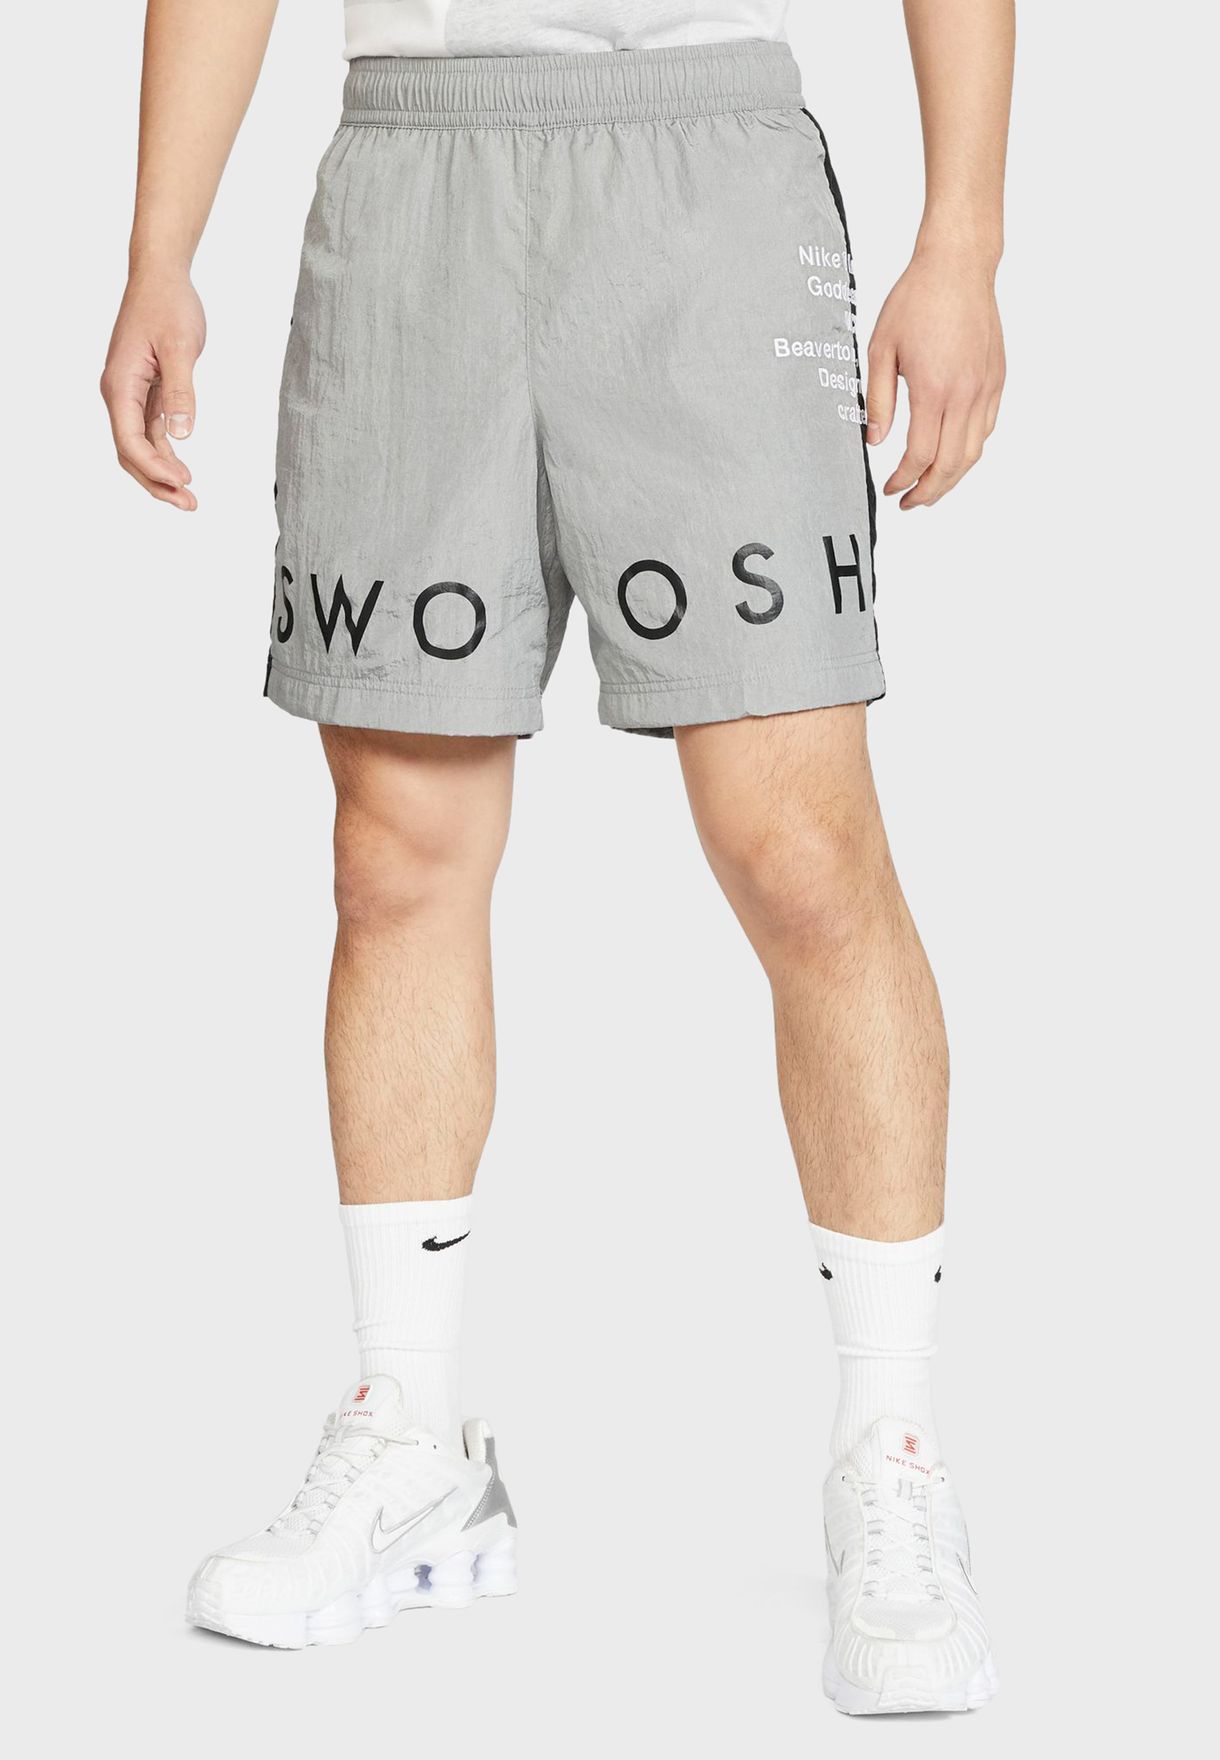 grey nike swoosh shorts